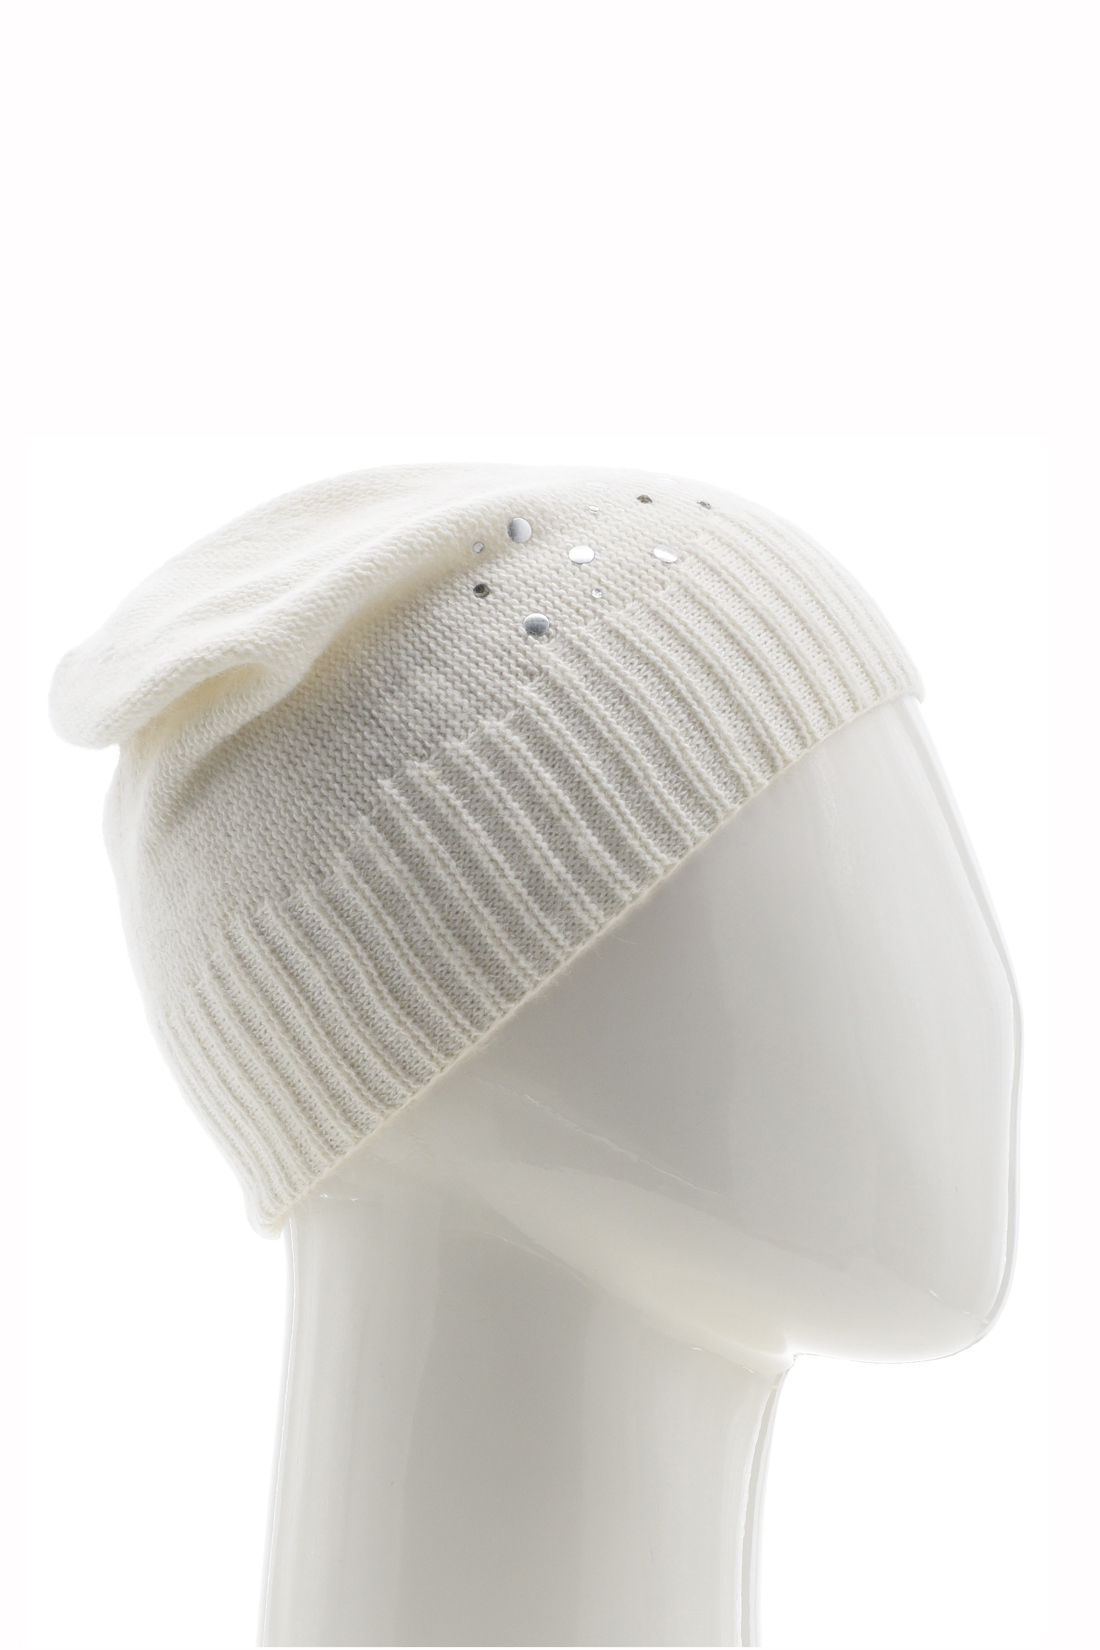 Полушерстяная шапка со стразами (арт. baon B348576), размер Б/р 56, цвет белый Полушерстяная шапка со стразами (арт. baon B348576) - фото 3